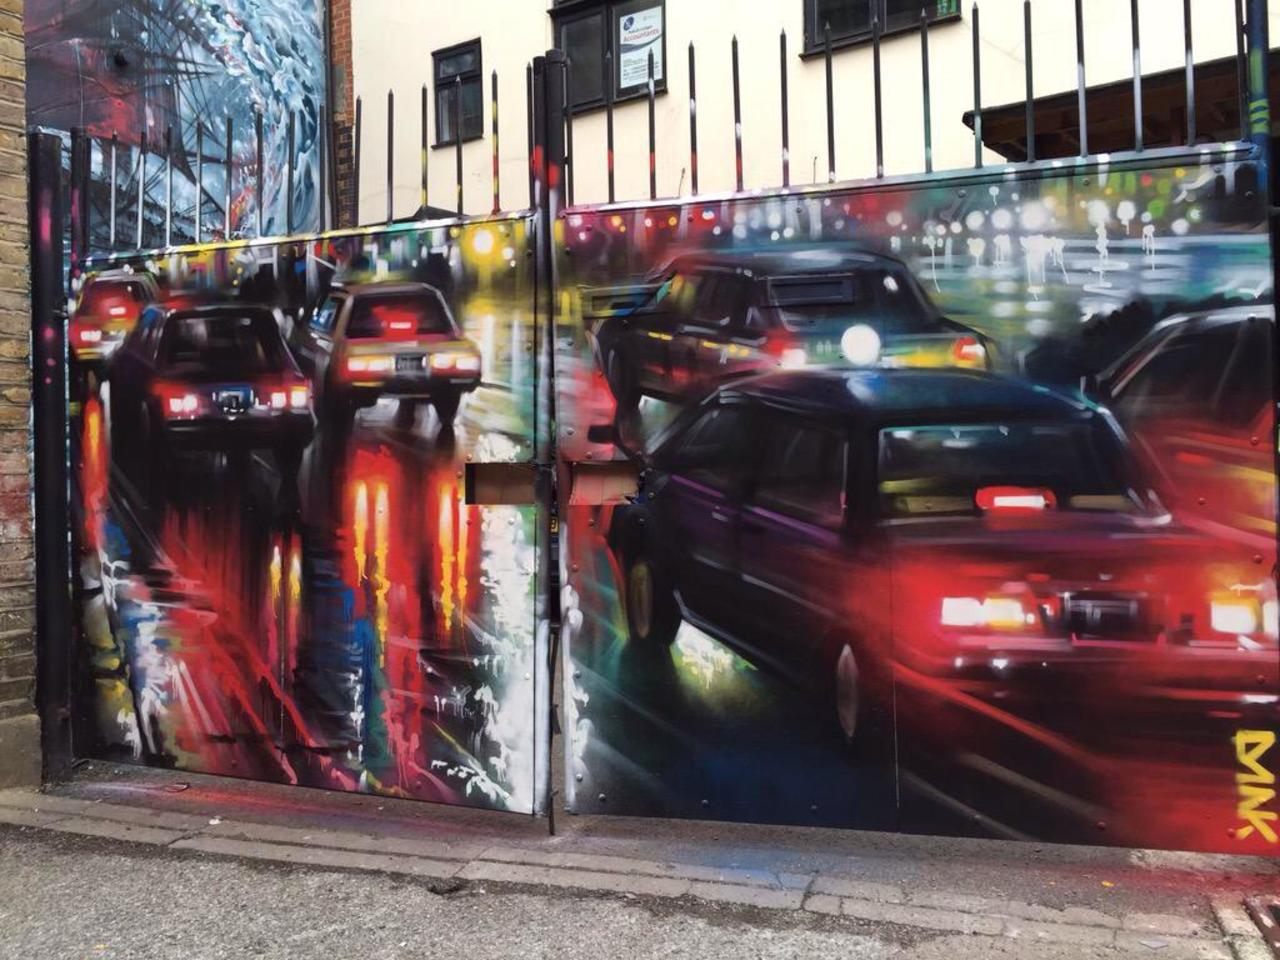 New Street Art by DanKitchener in Brick Lane London 

#art #graffiti #mural #streetart http://t.co/BKylxBamKj